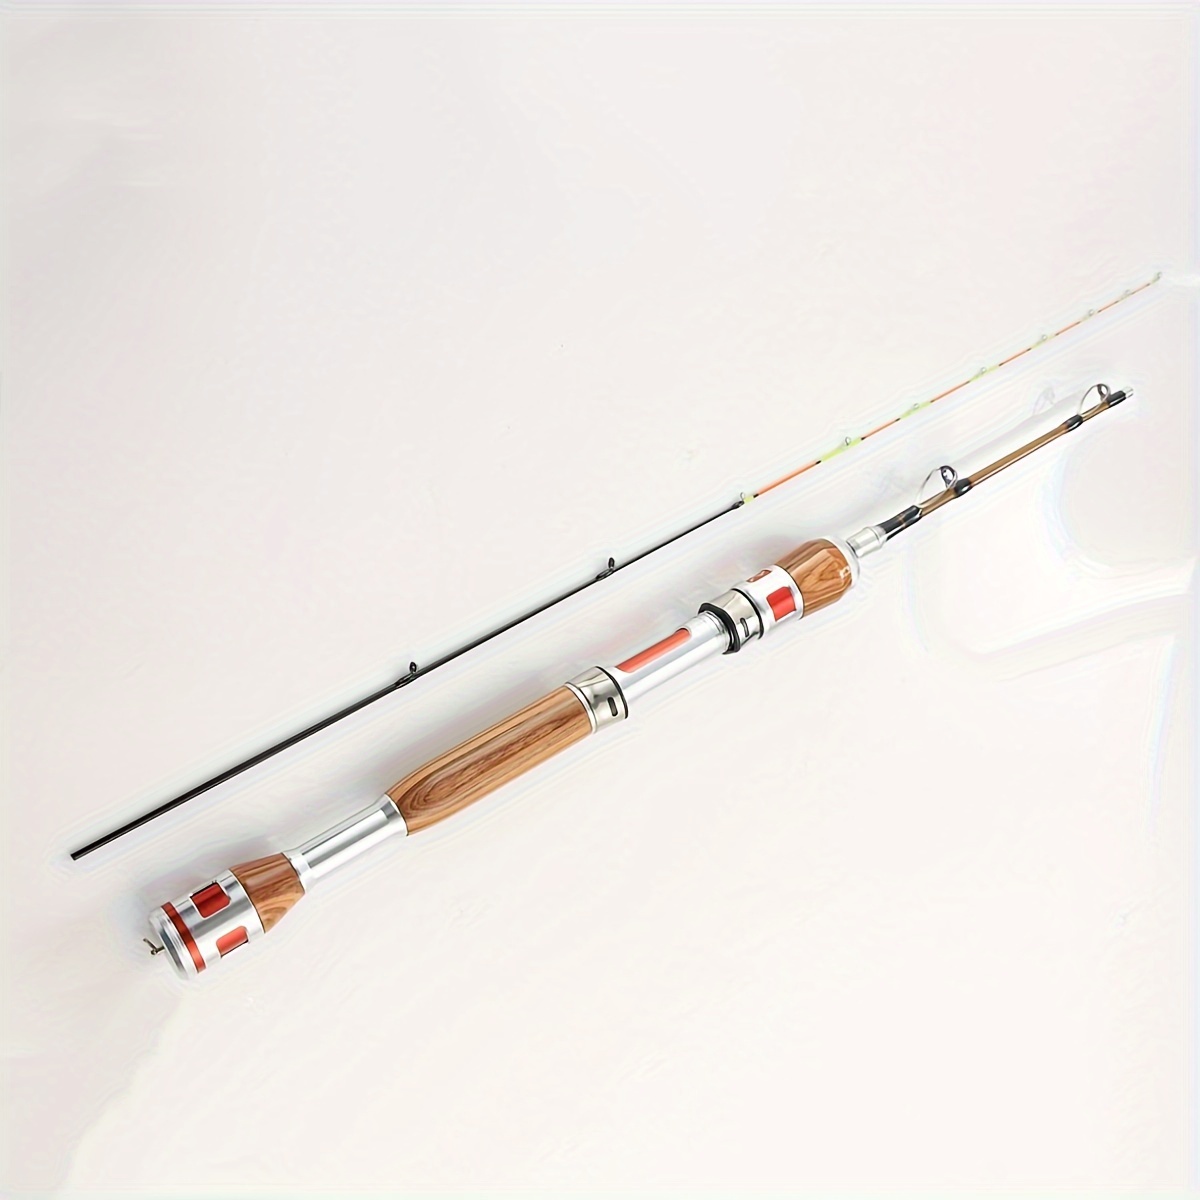 1pc 2-section Wood Grain Fishing Rod, 3.9ft/120cm Carbon Fiber Ultra Light  Fishing Pole For Freshwater